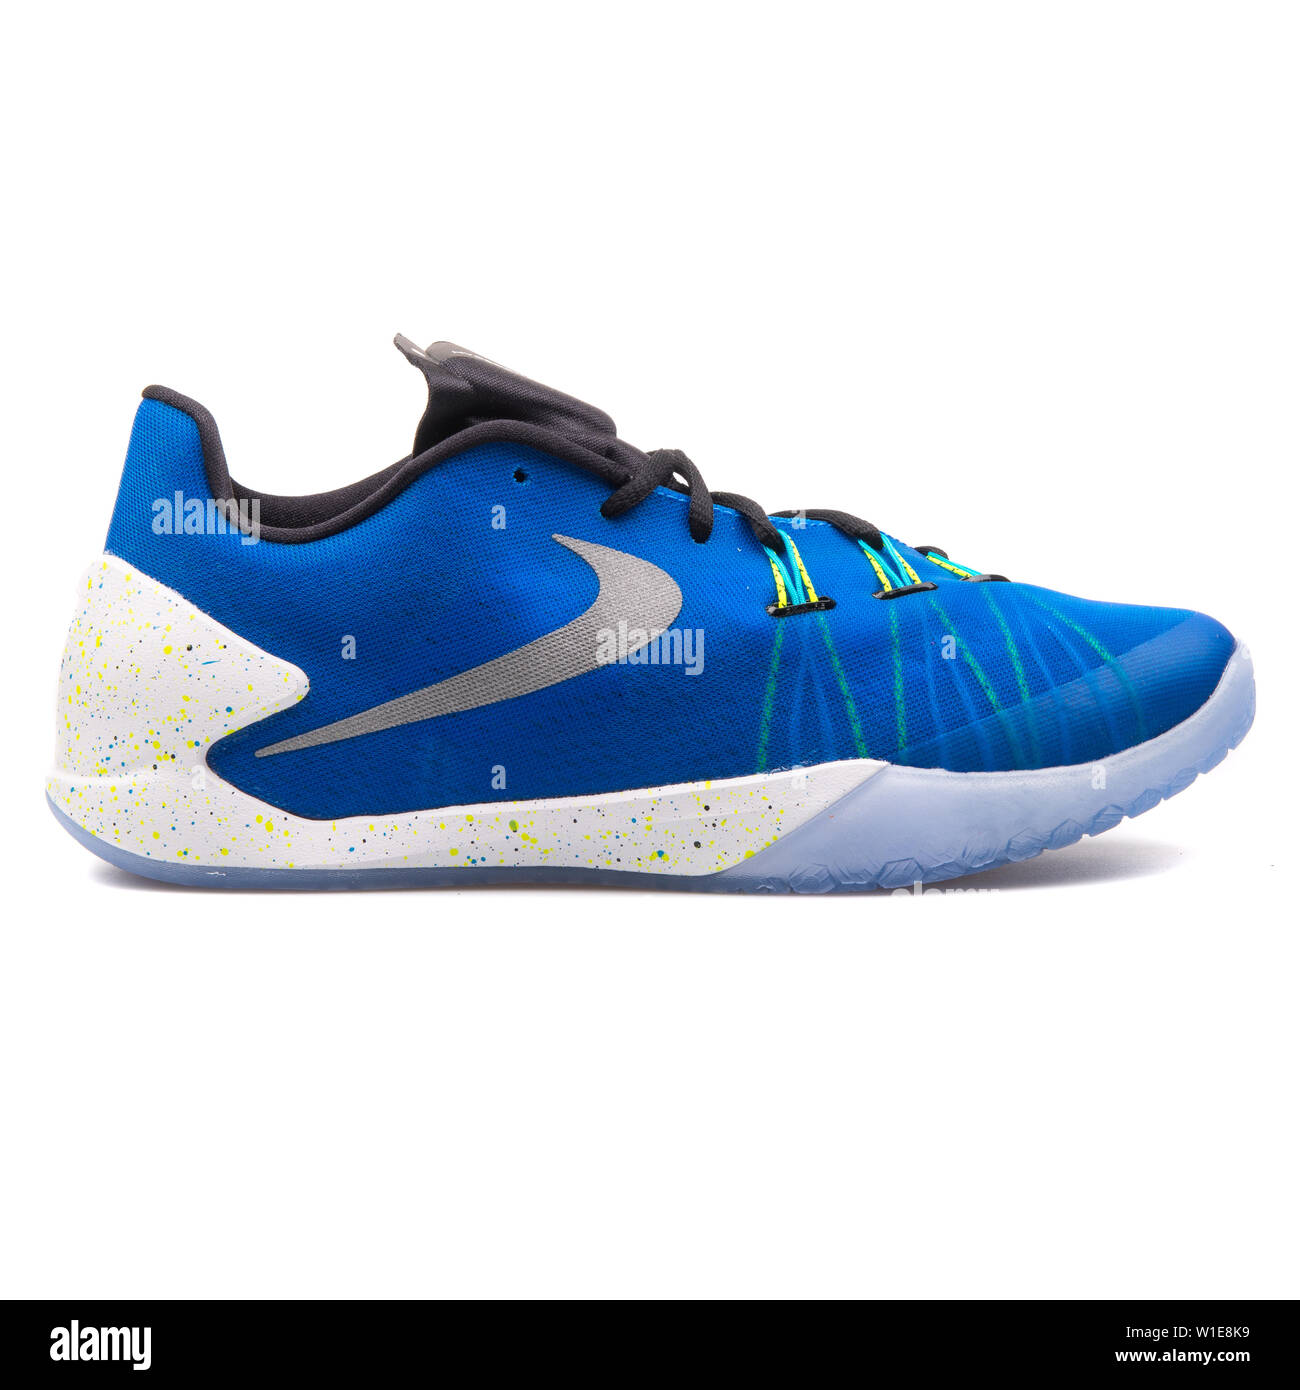 2017: Nike Hyperchase Premium blue 